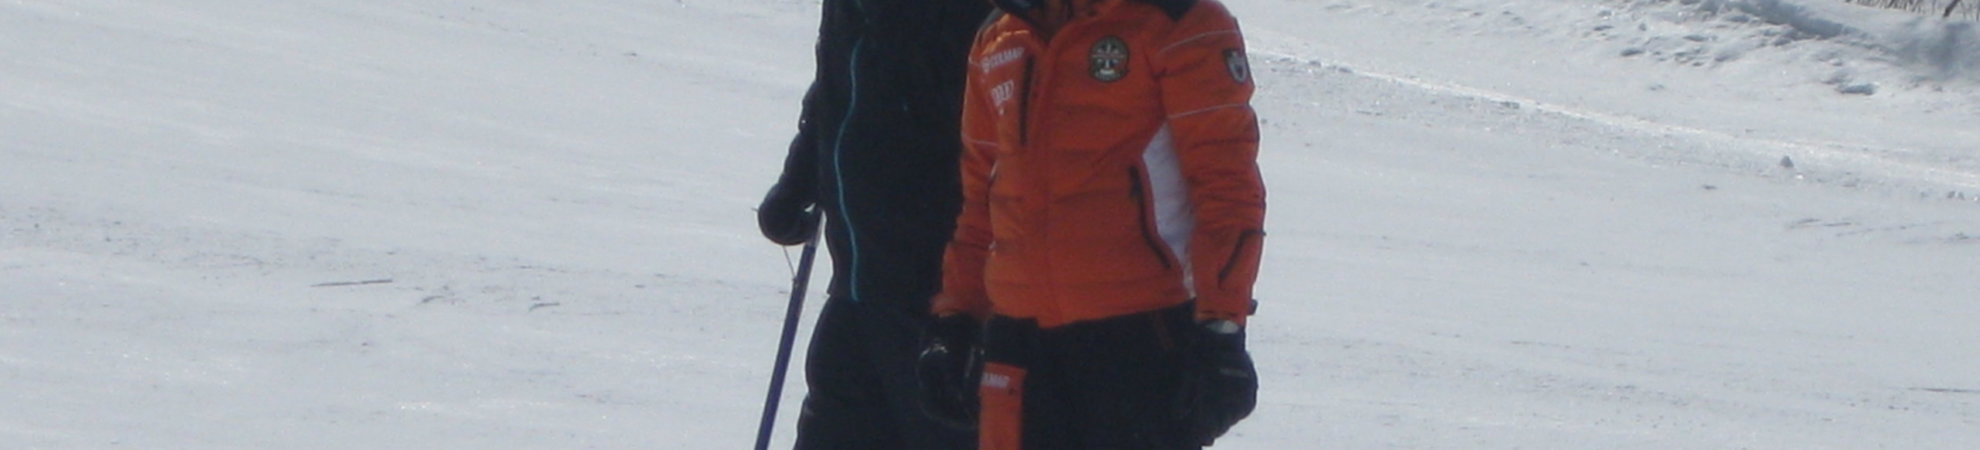 Jim Duffy adaptive ski lesson